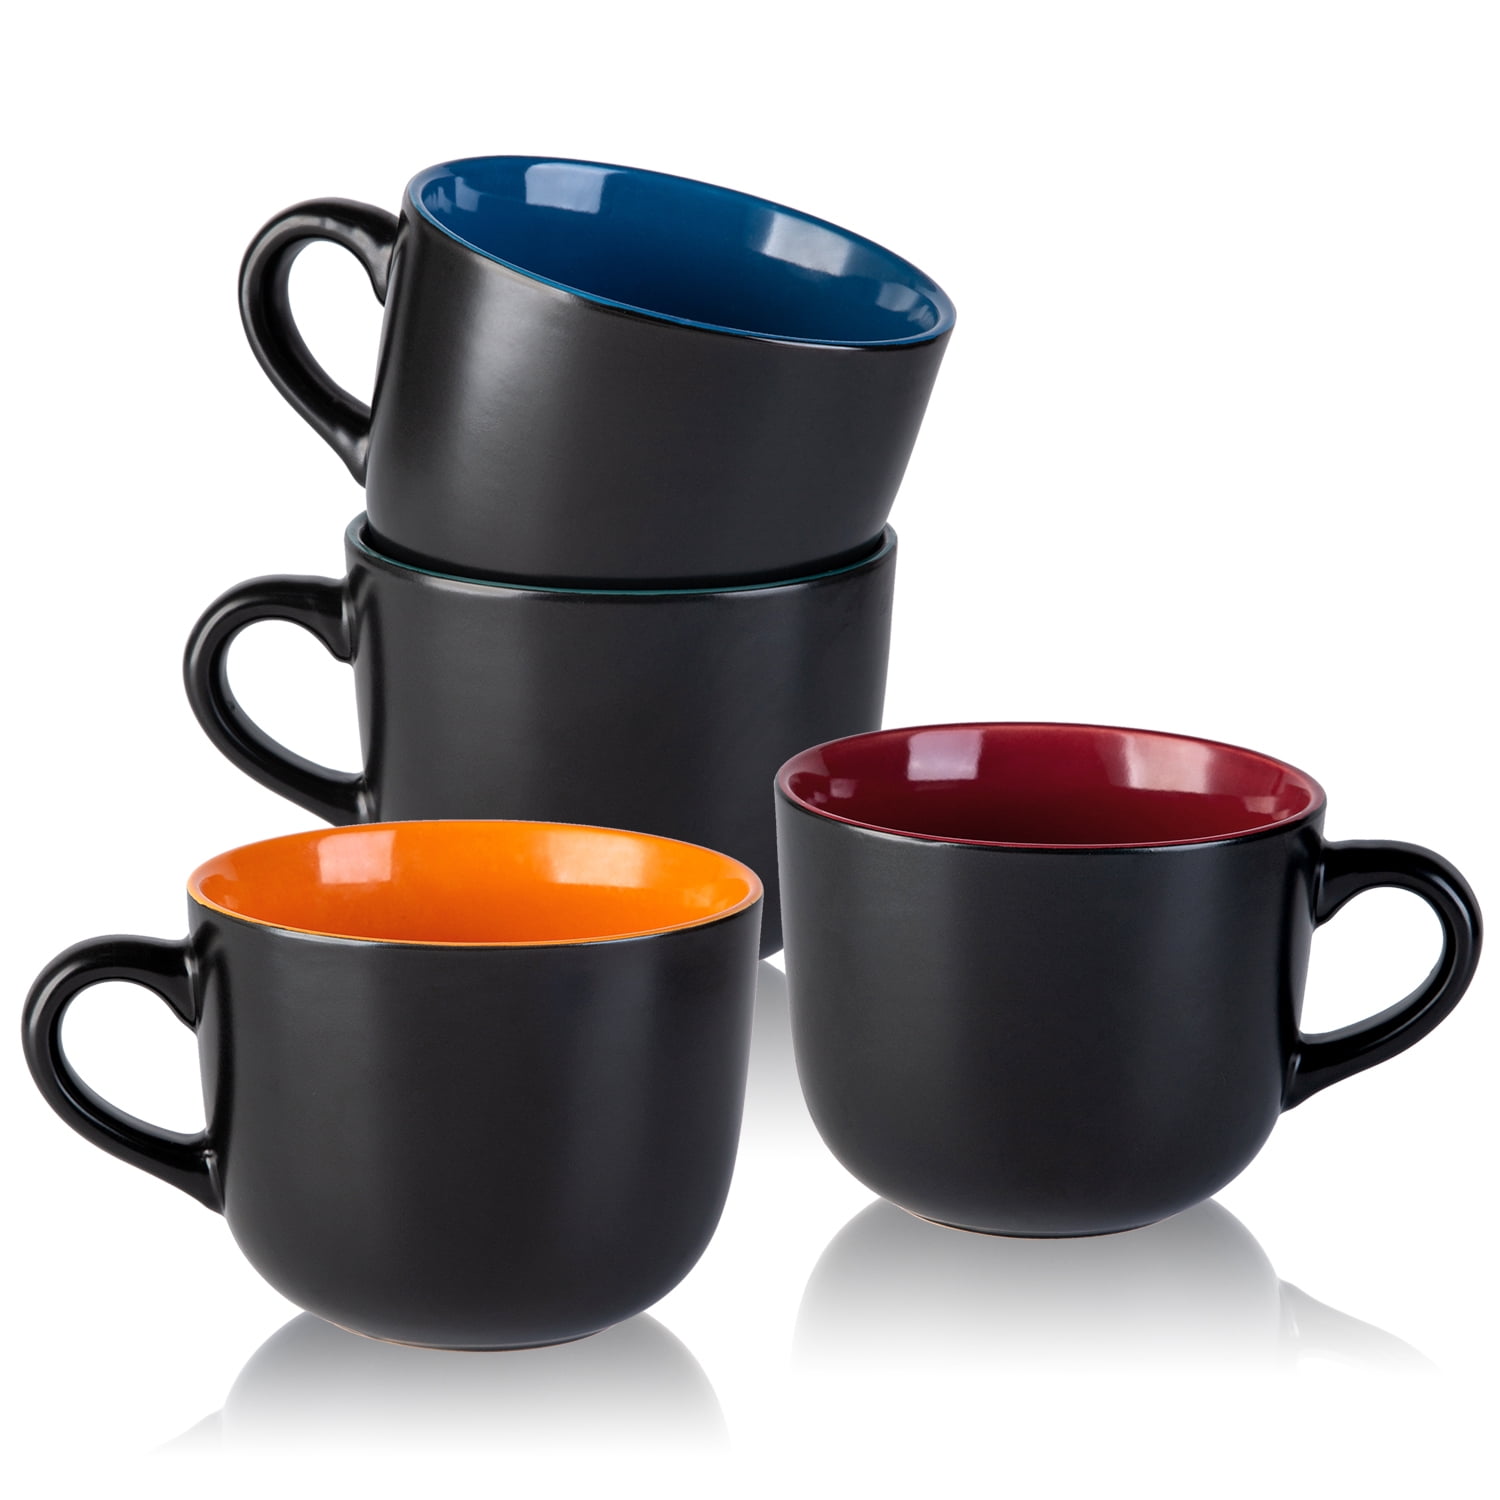 32oz Coffee Mug, Large Coffee Mug, Soup Bowl With Handle, the Legend 